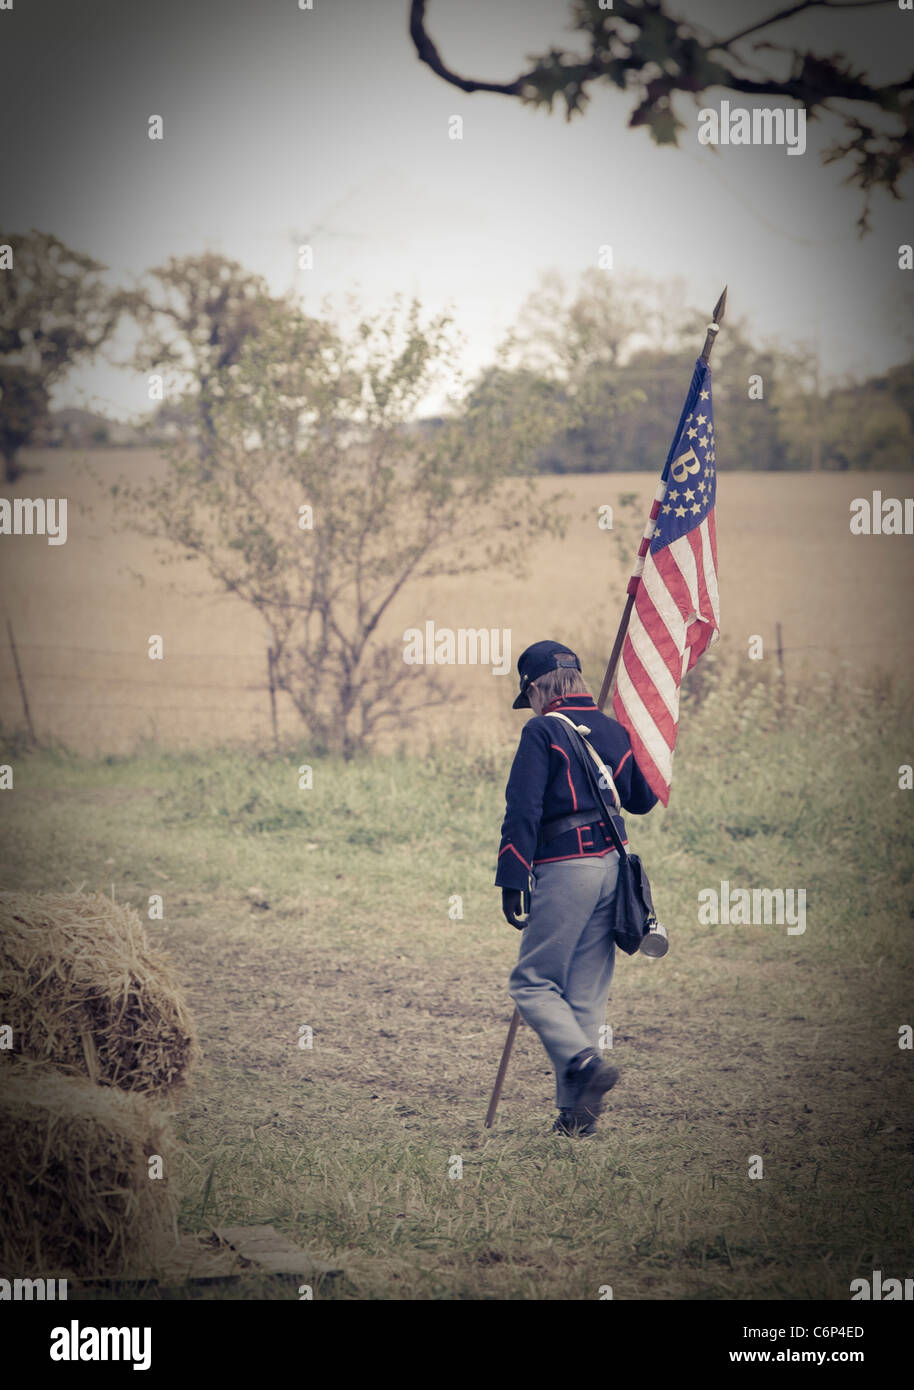 A young boy in uniform reenacts a civil war scene Stock Photo